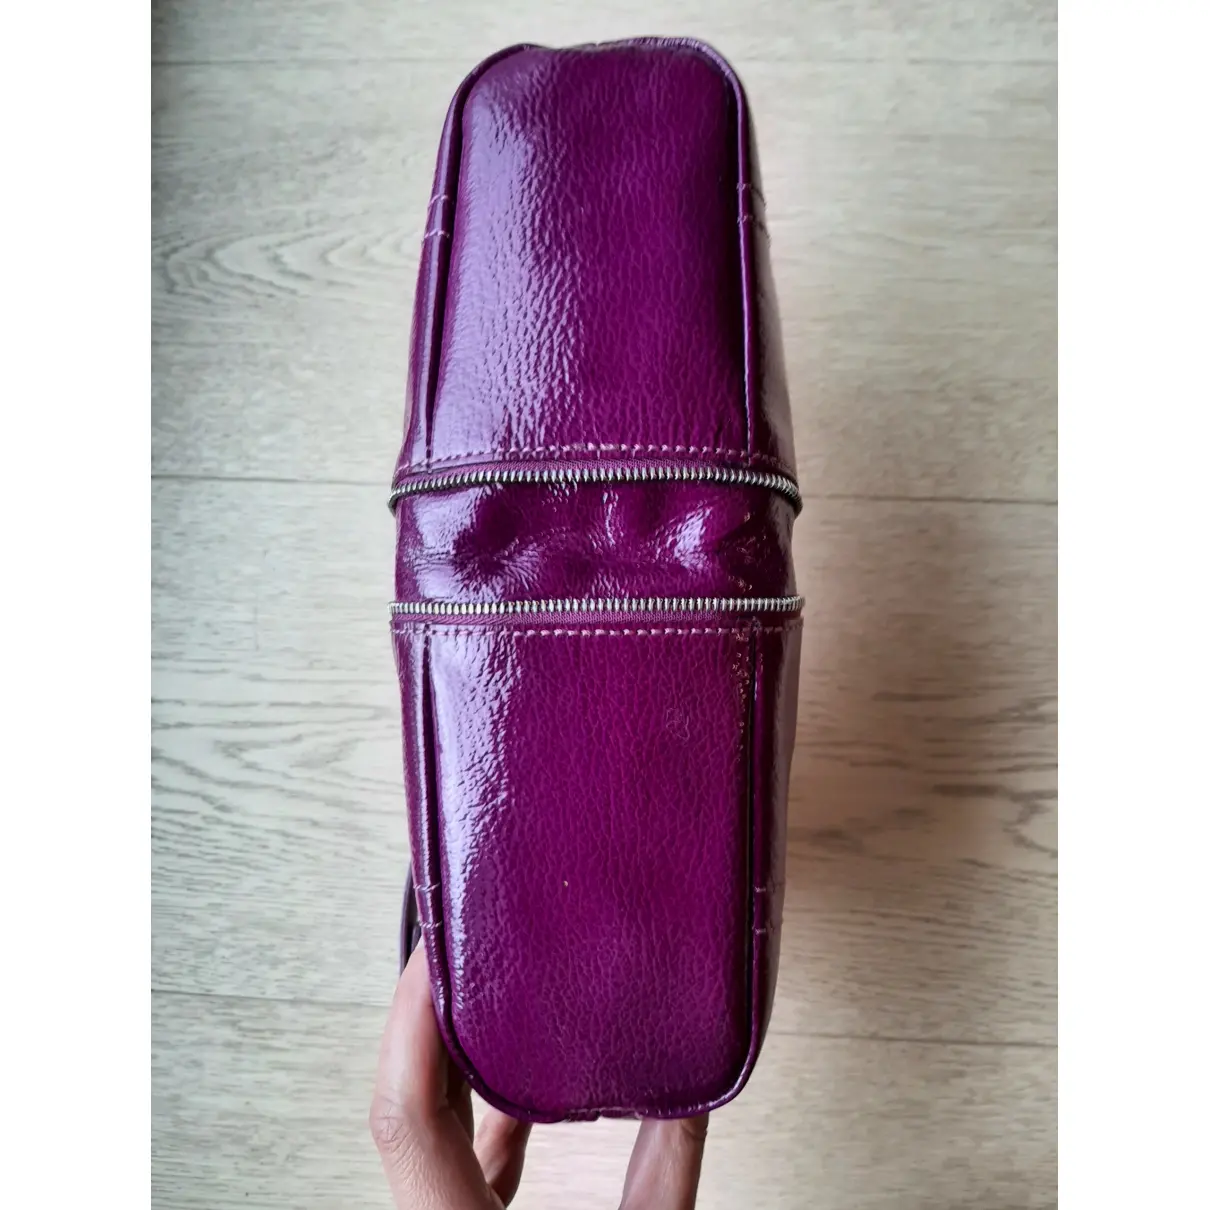 Buy Longchamp Patent leather mini bag online